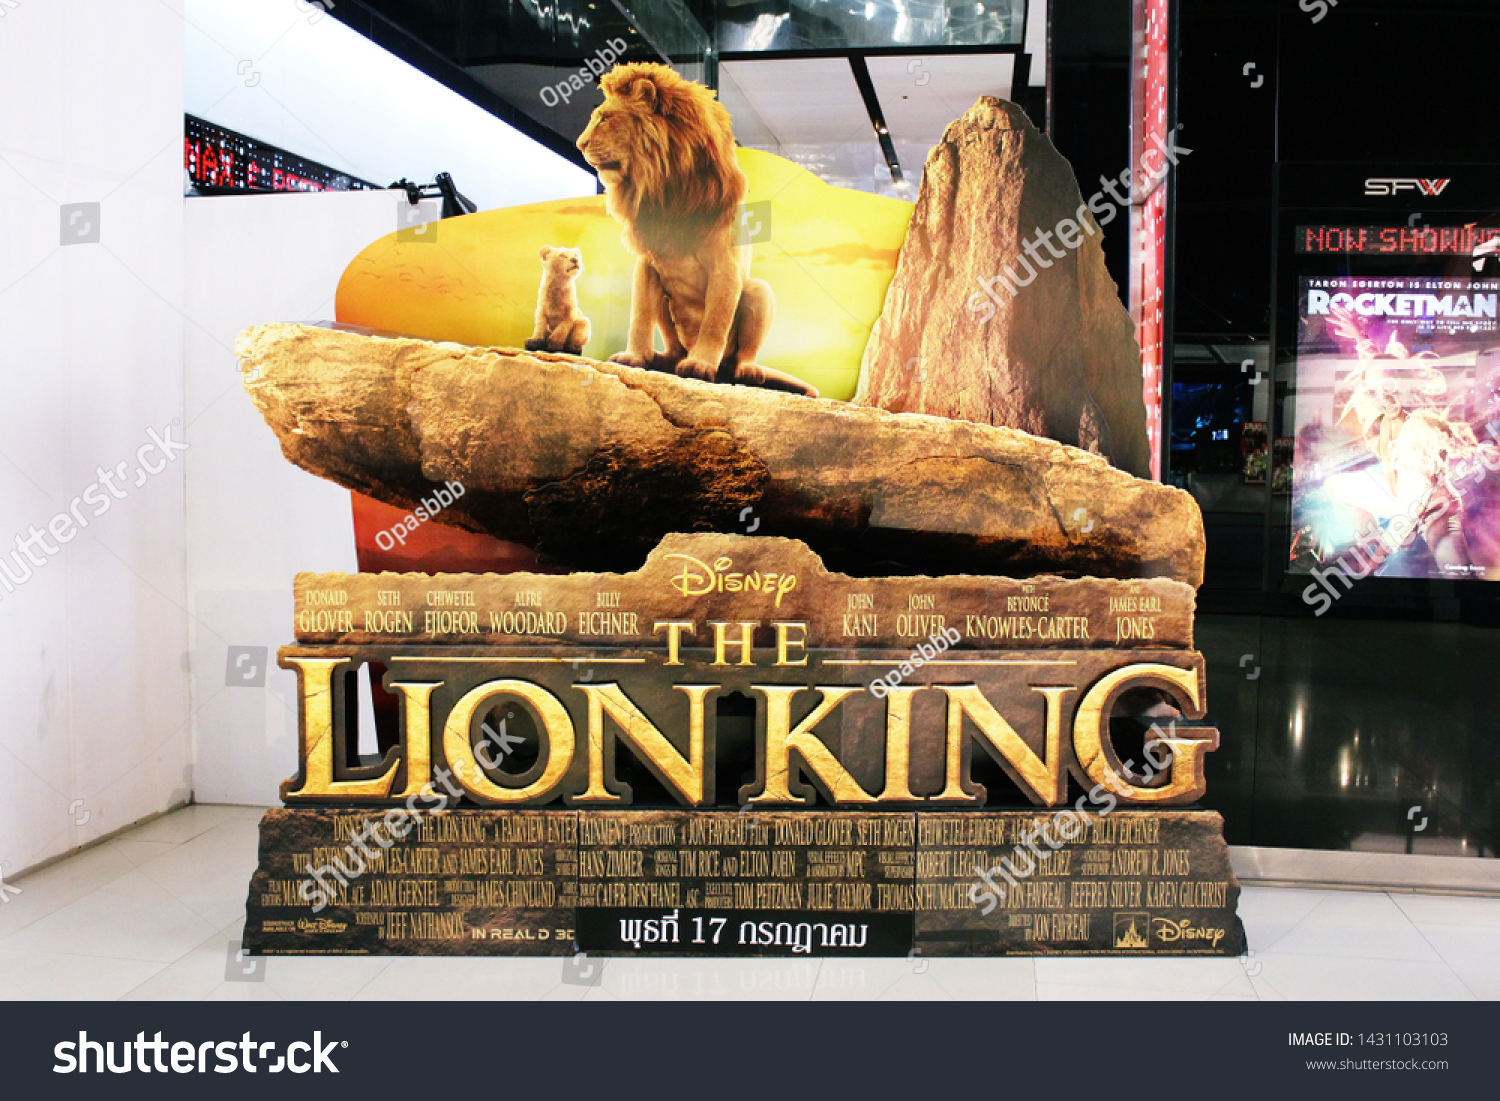 SIMBA THE LION KING DISNEY 84cm TALL CARDBOARD CUTOUT FREE STANDING STANDEE